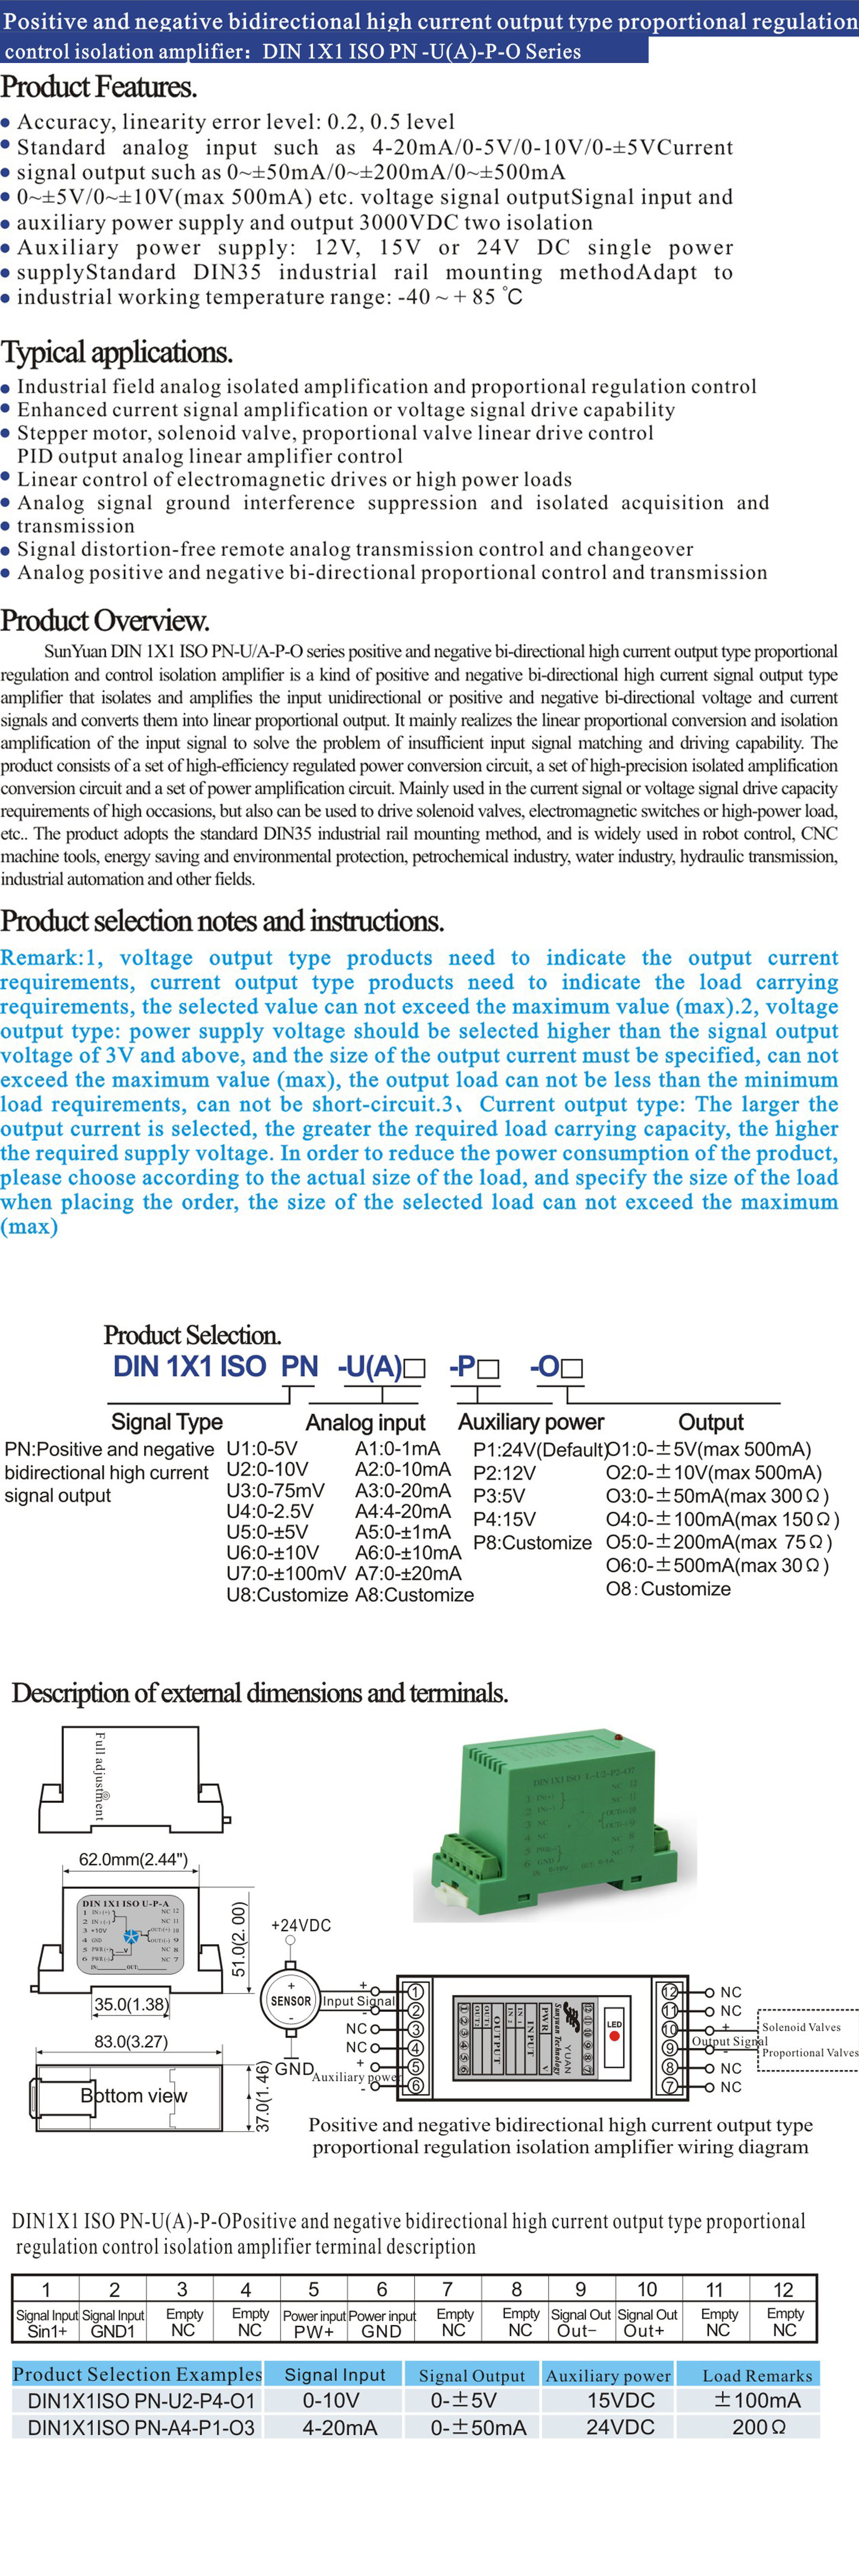 DIN1X1 ISO PN U(A)-P-O- 分割PDF.jpg